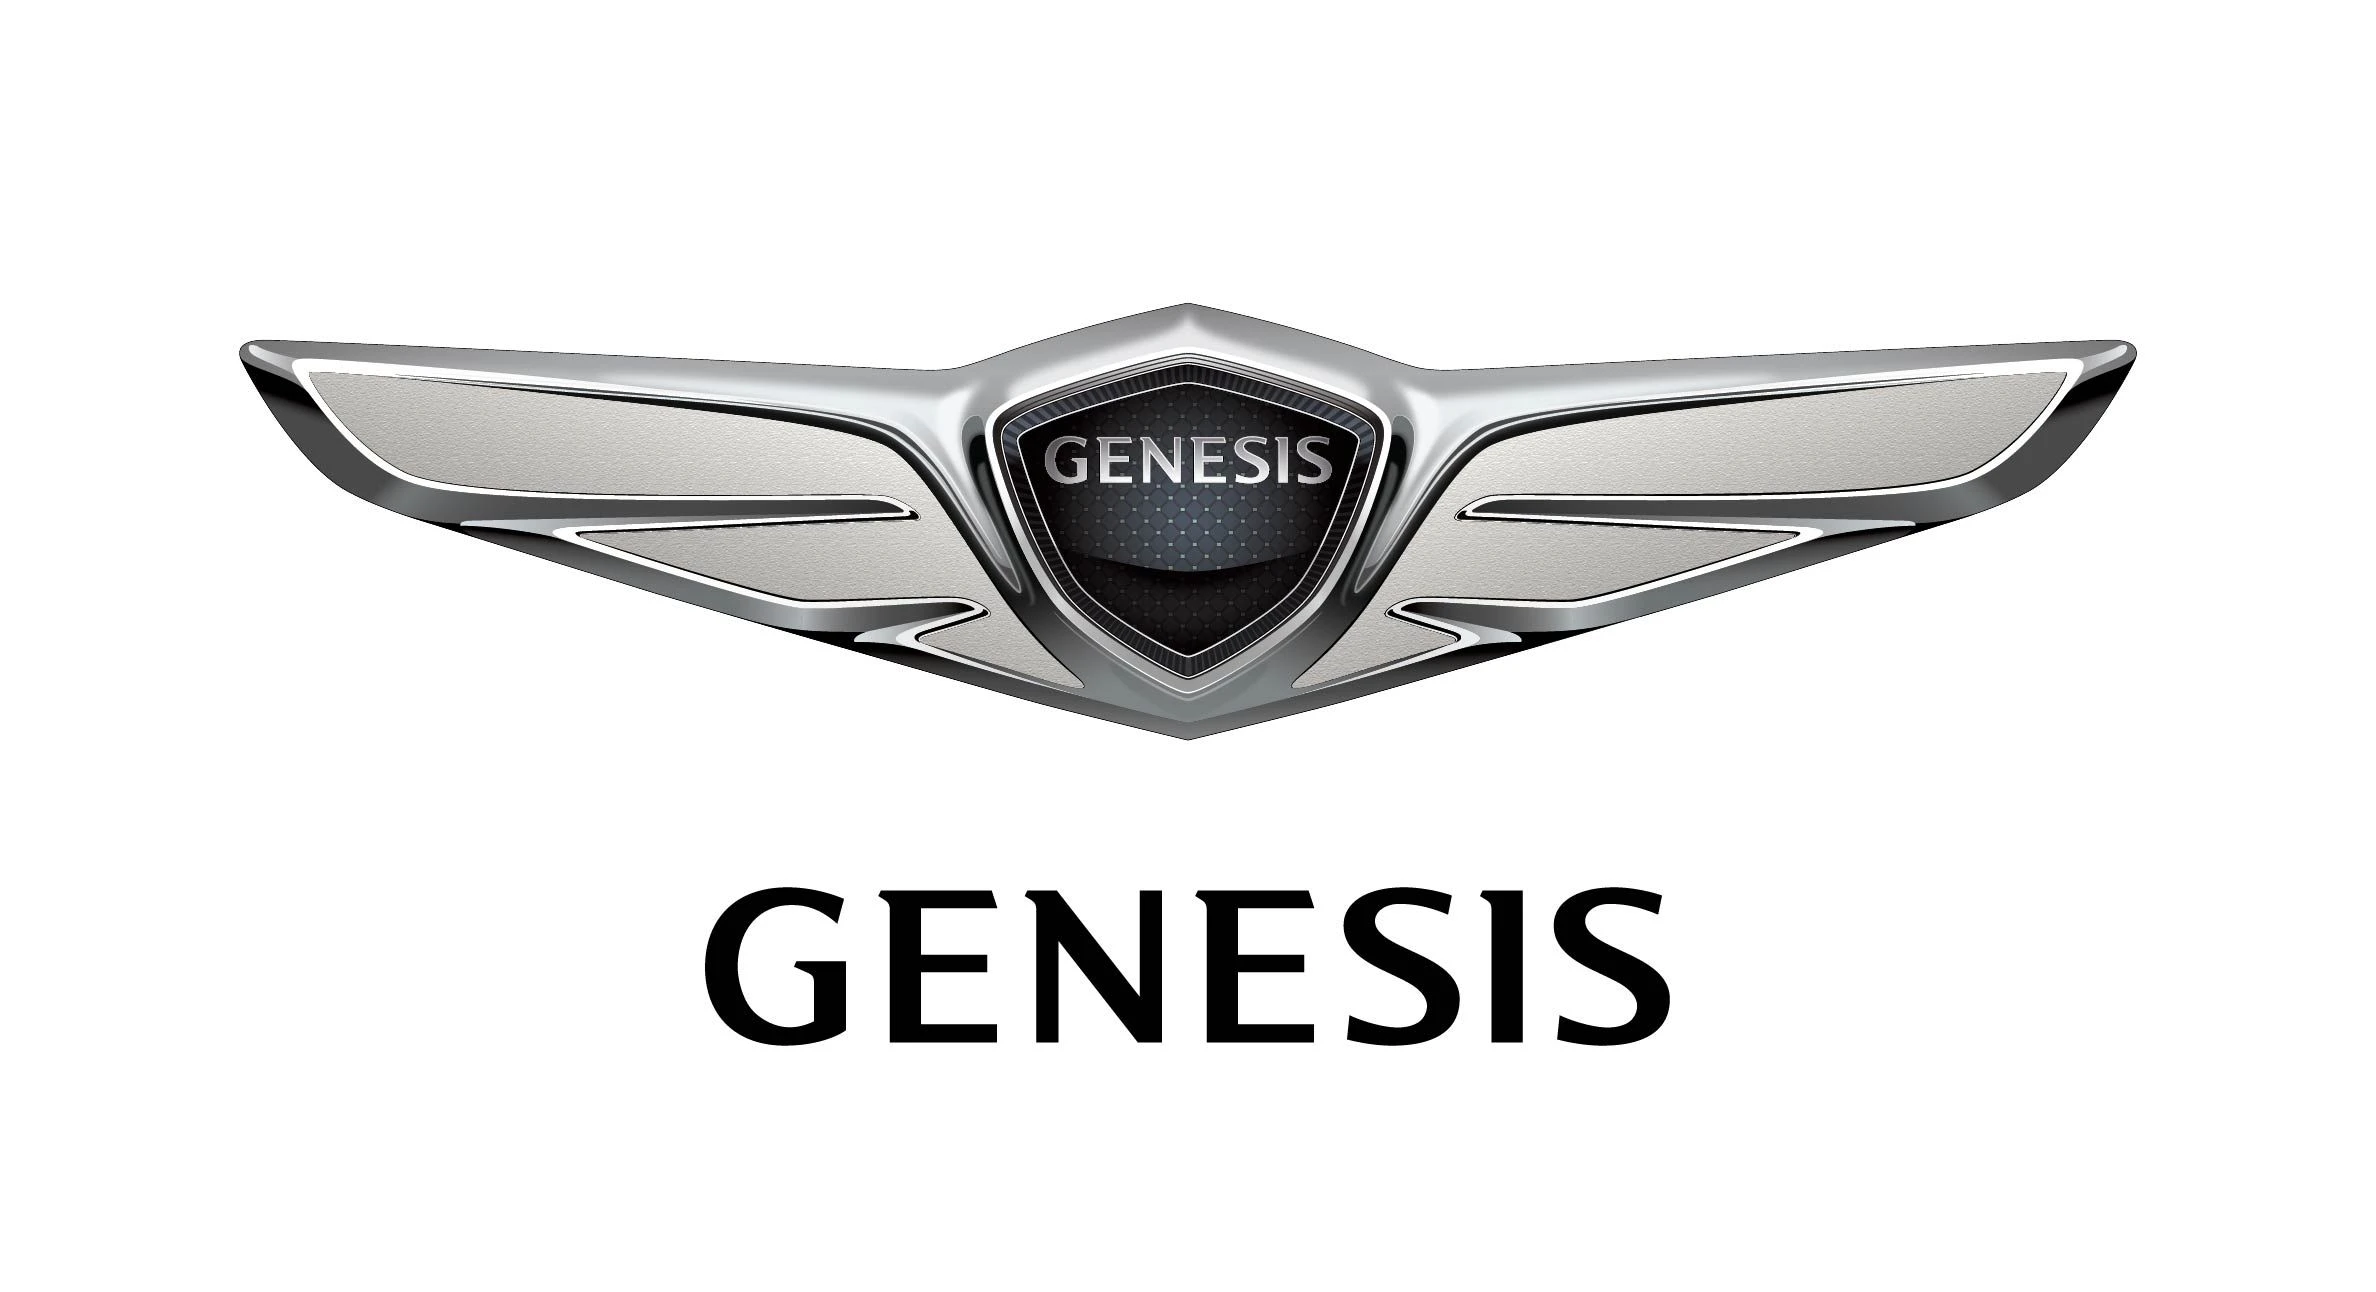 Genesis car brand logo